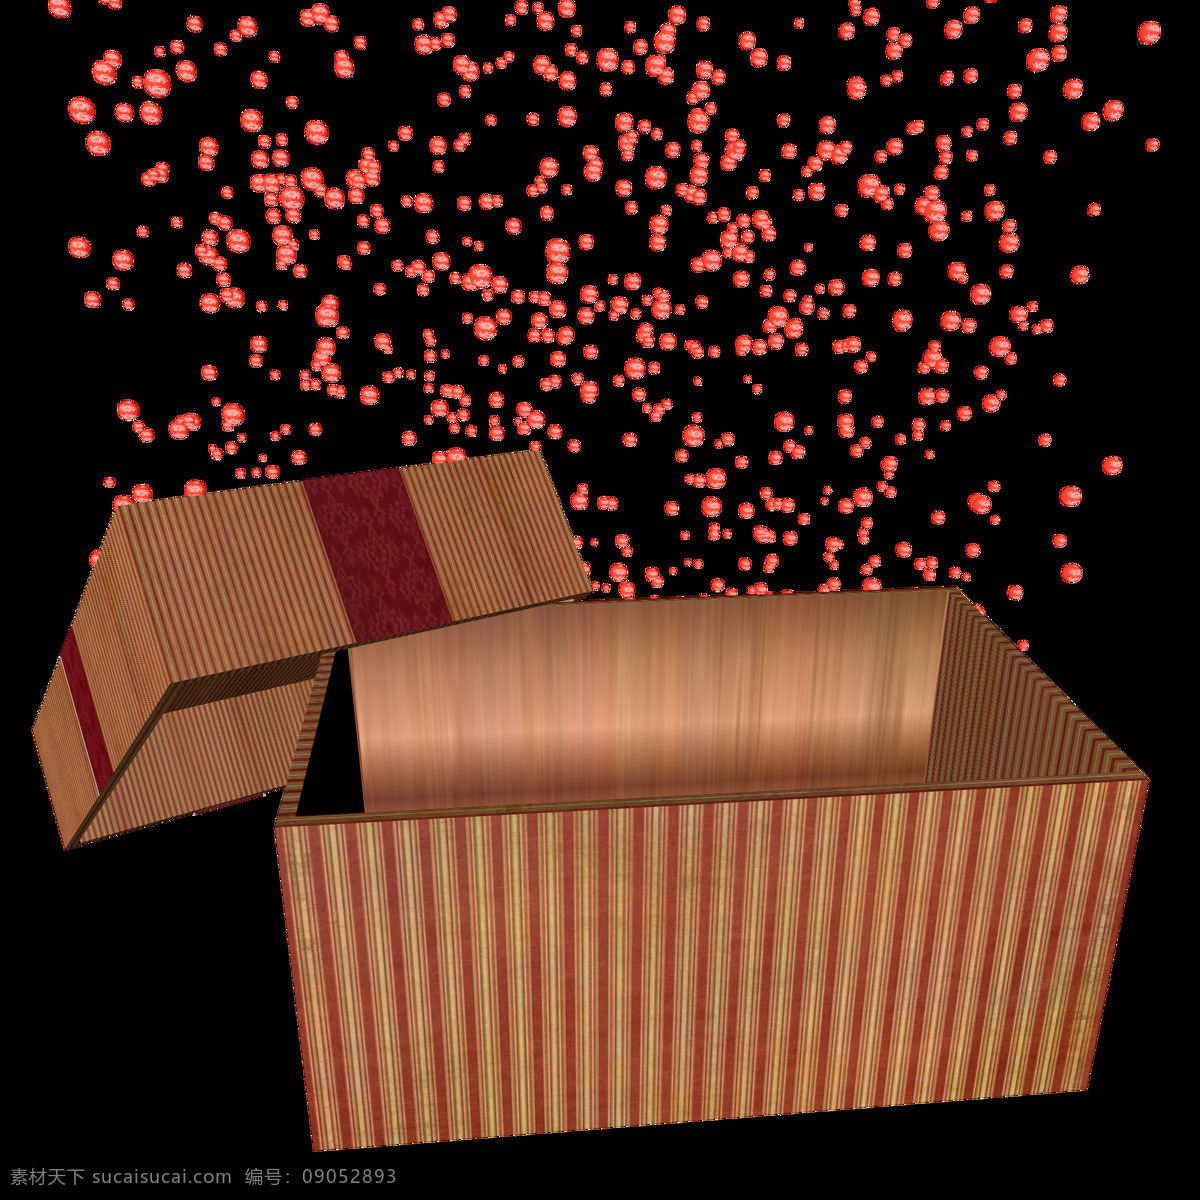 c4d 圣诞 礼物 盒 节日 古典 传统 粒子 背景 礼物盒